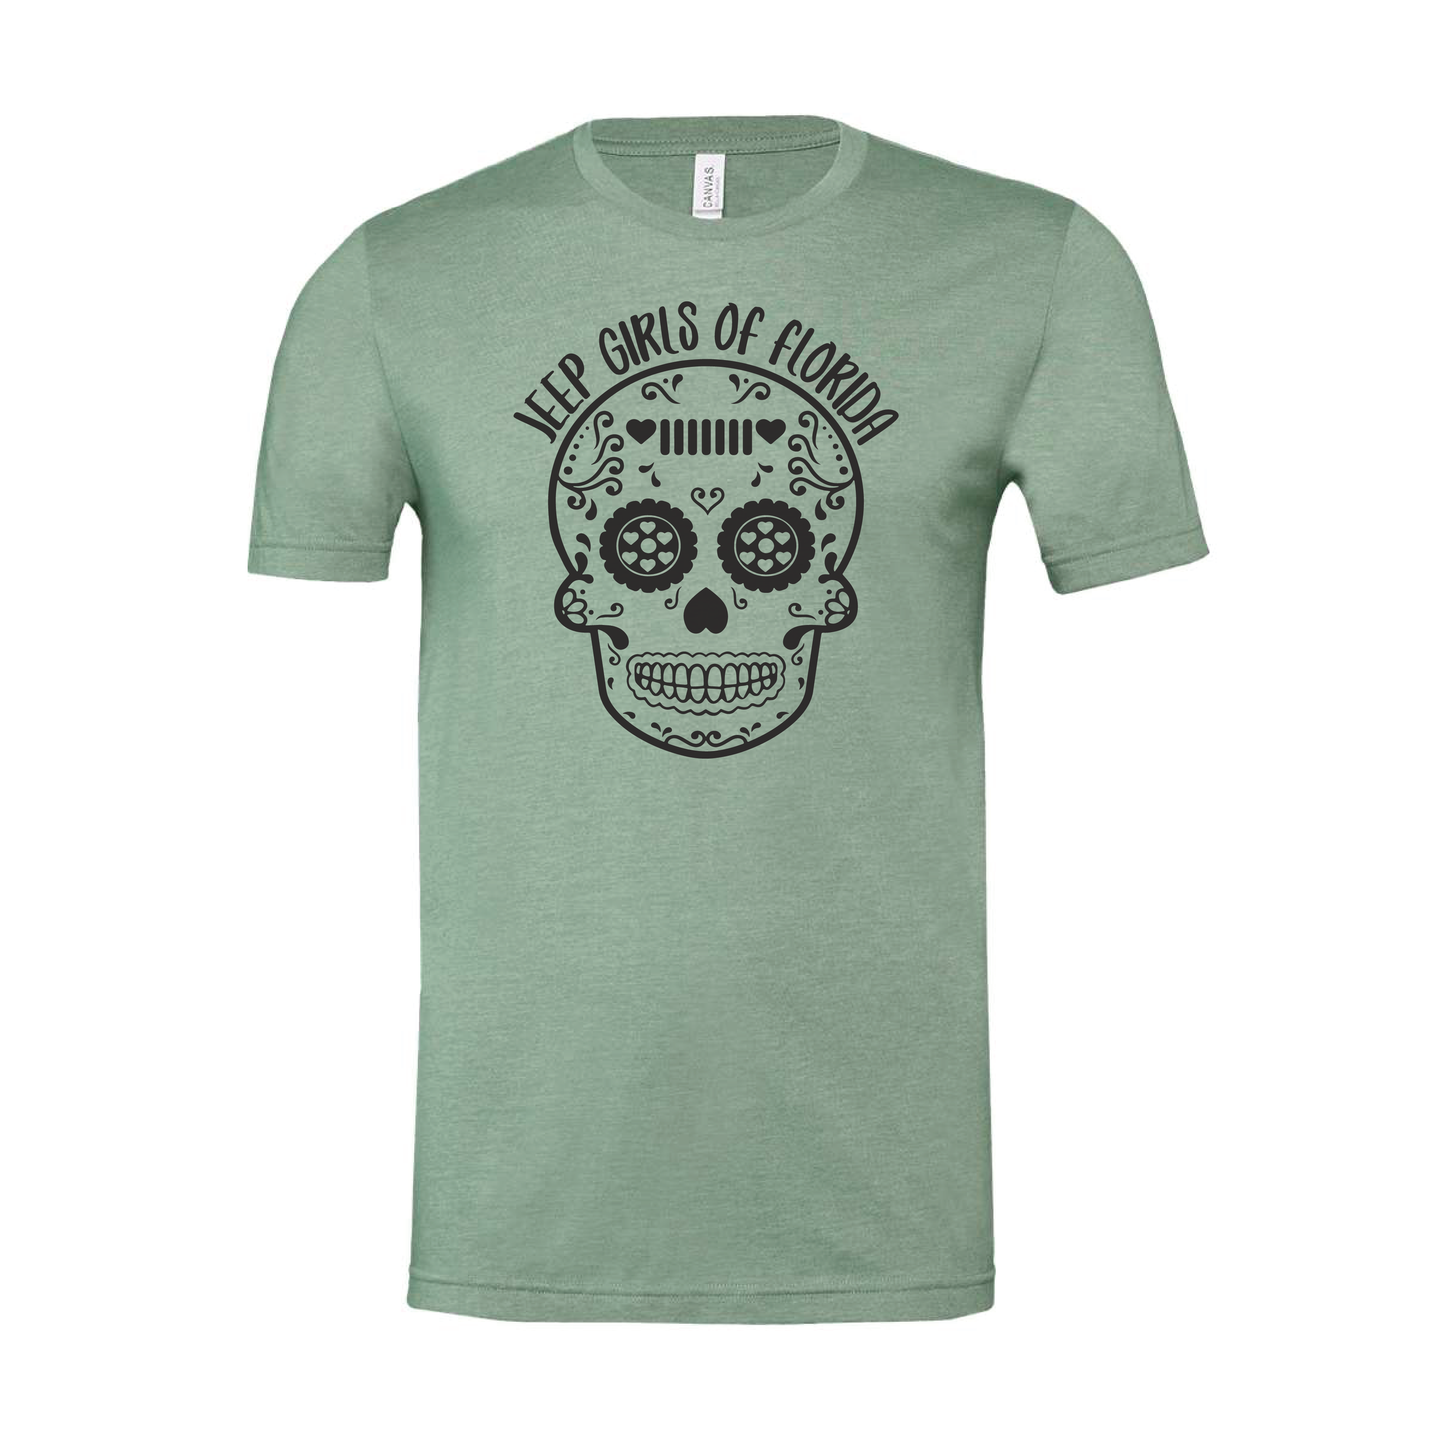 JGOF Sugar Skull - Shirt, Tank Top, Long Sleeve or Hoodie - Available in Multiple Colors